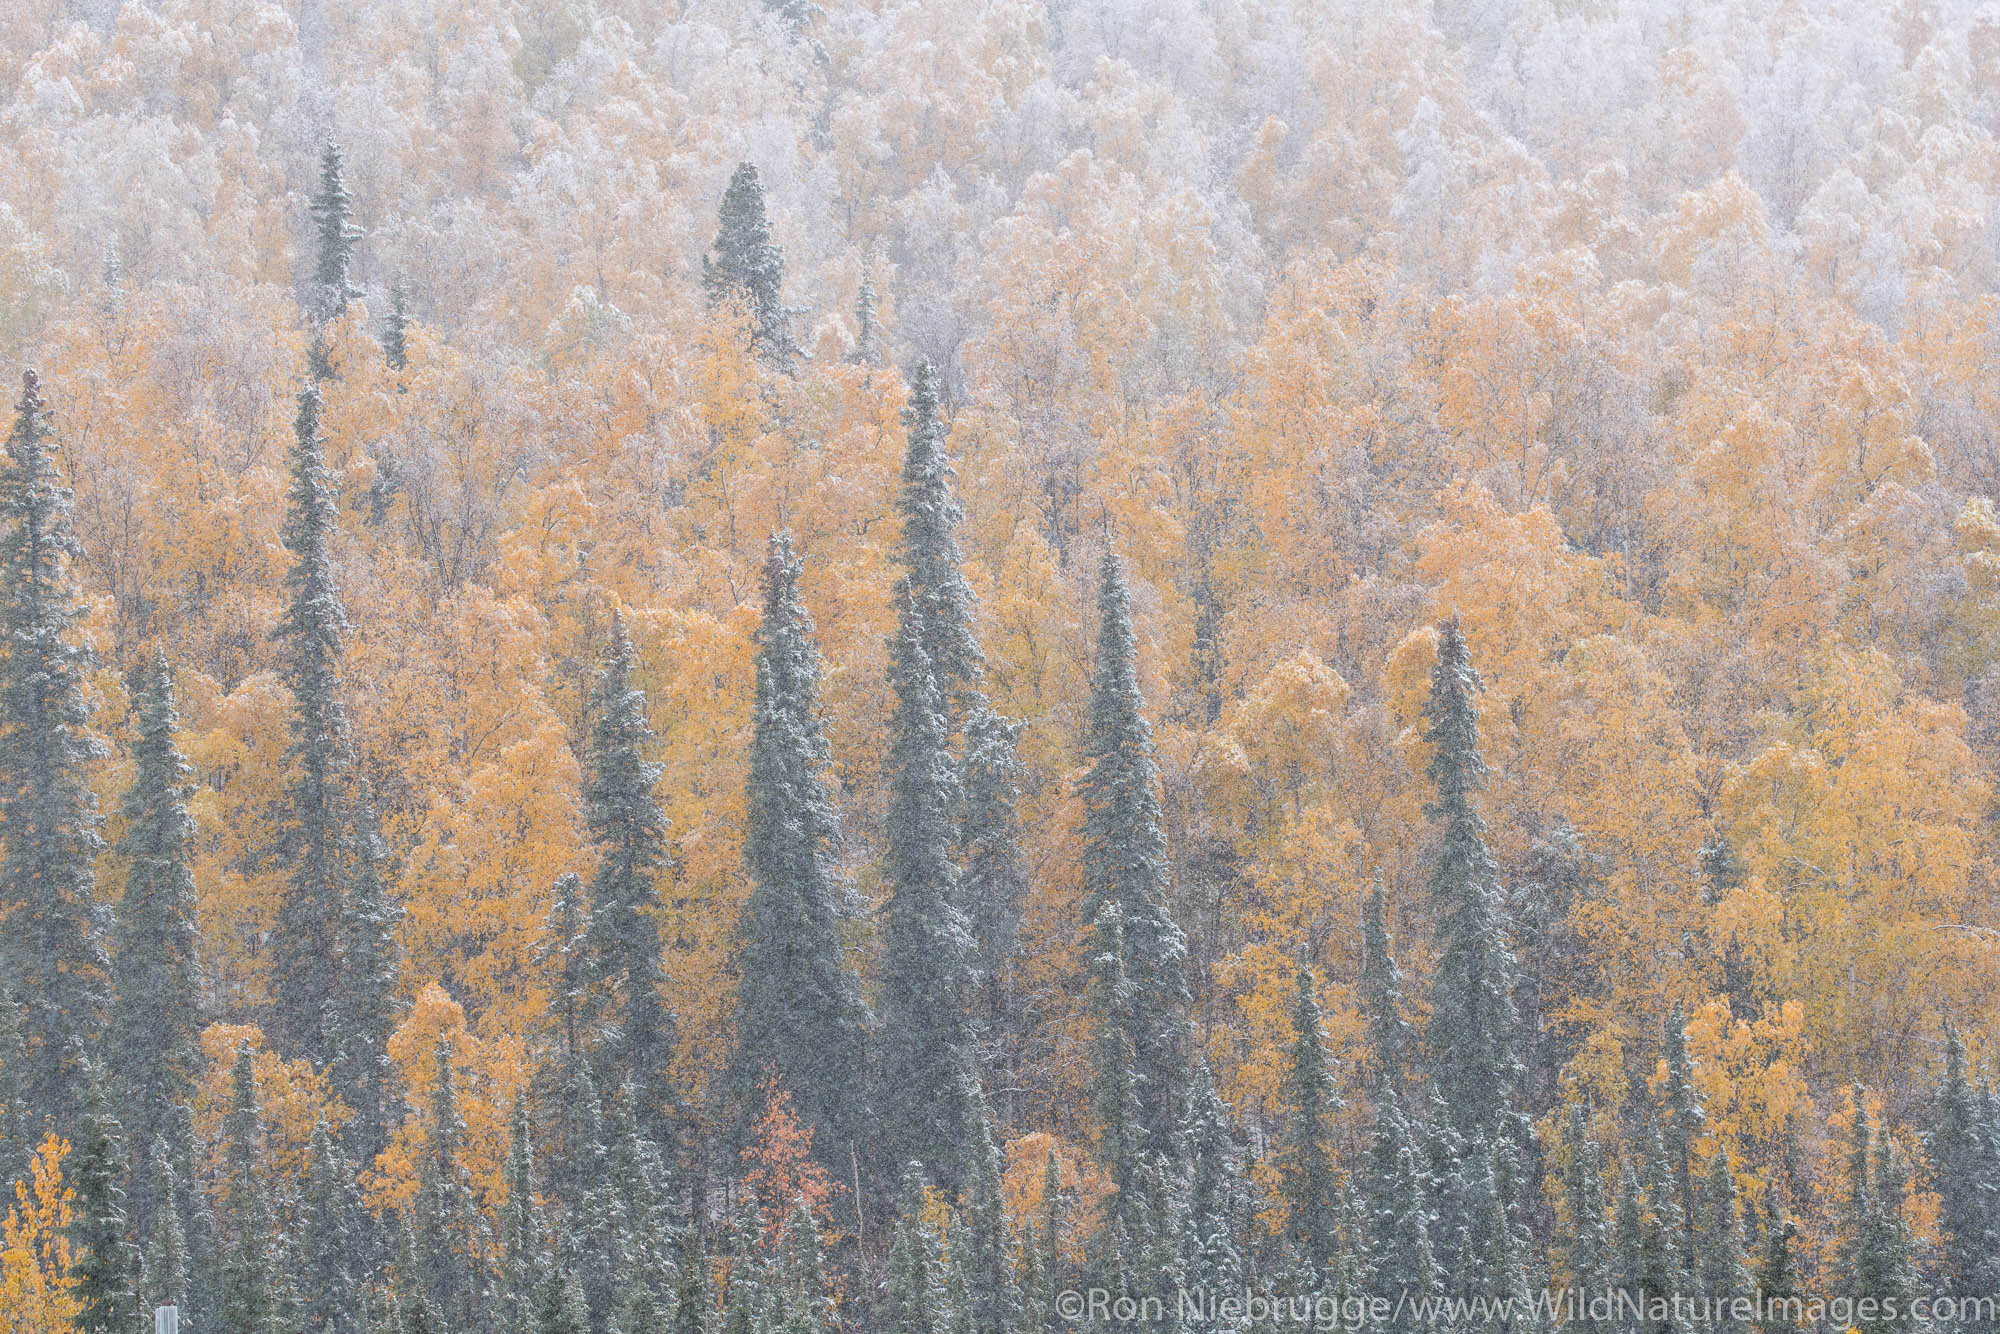 Snow during the Autumn, Brooks Range, Arctic Alaska.